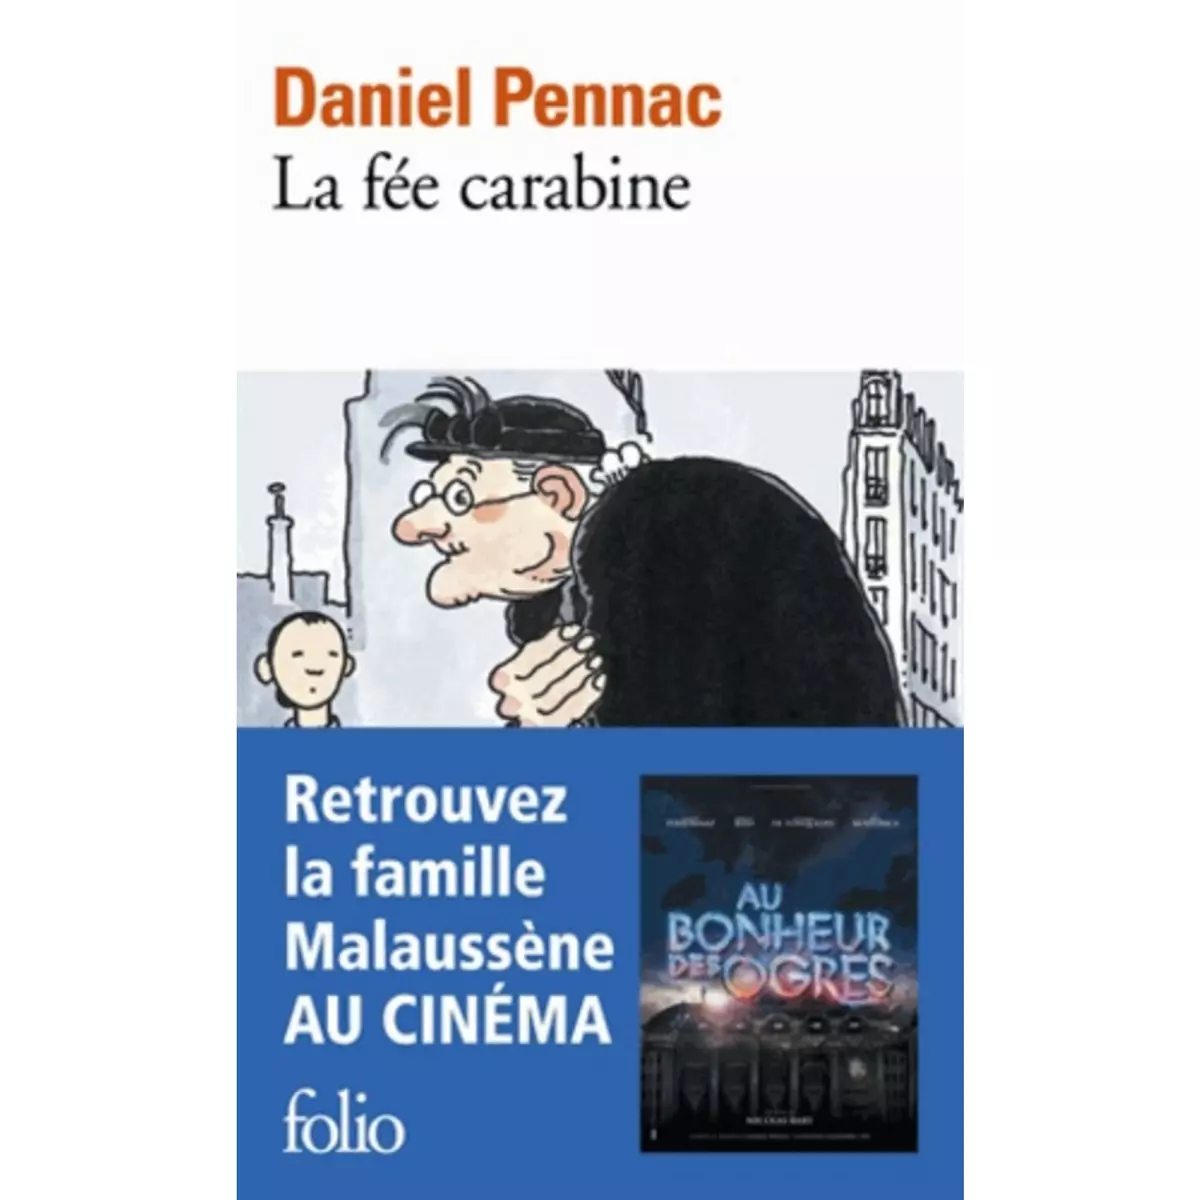  LA FEE CARABINE, Pennac Daniel